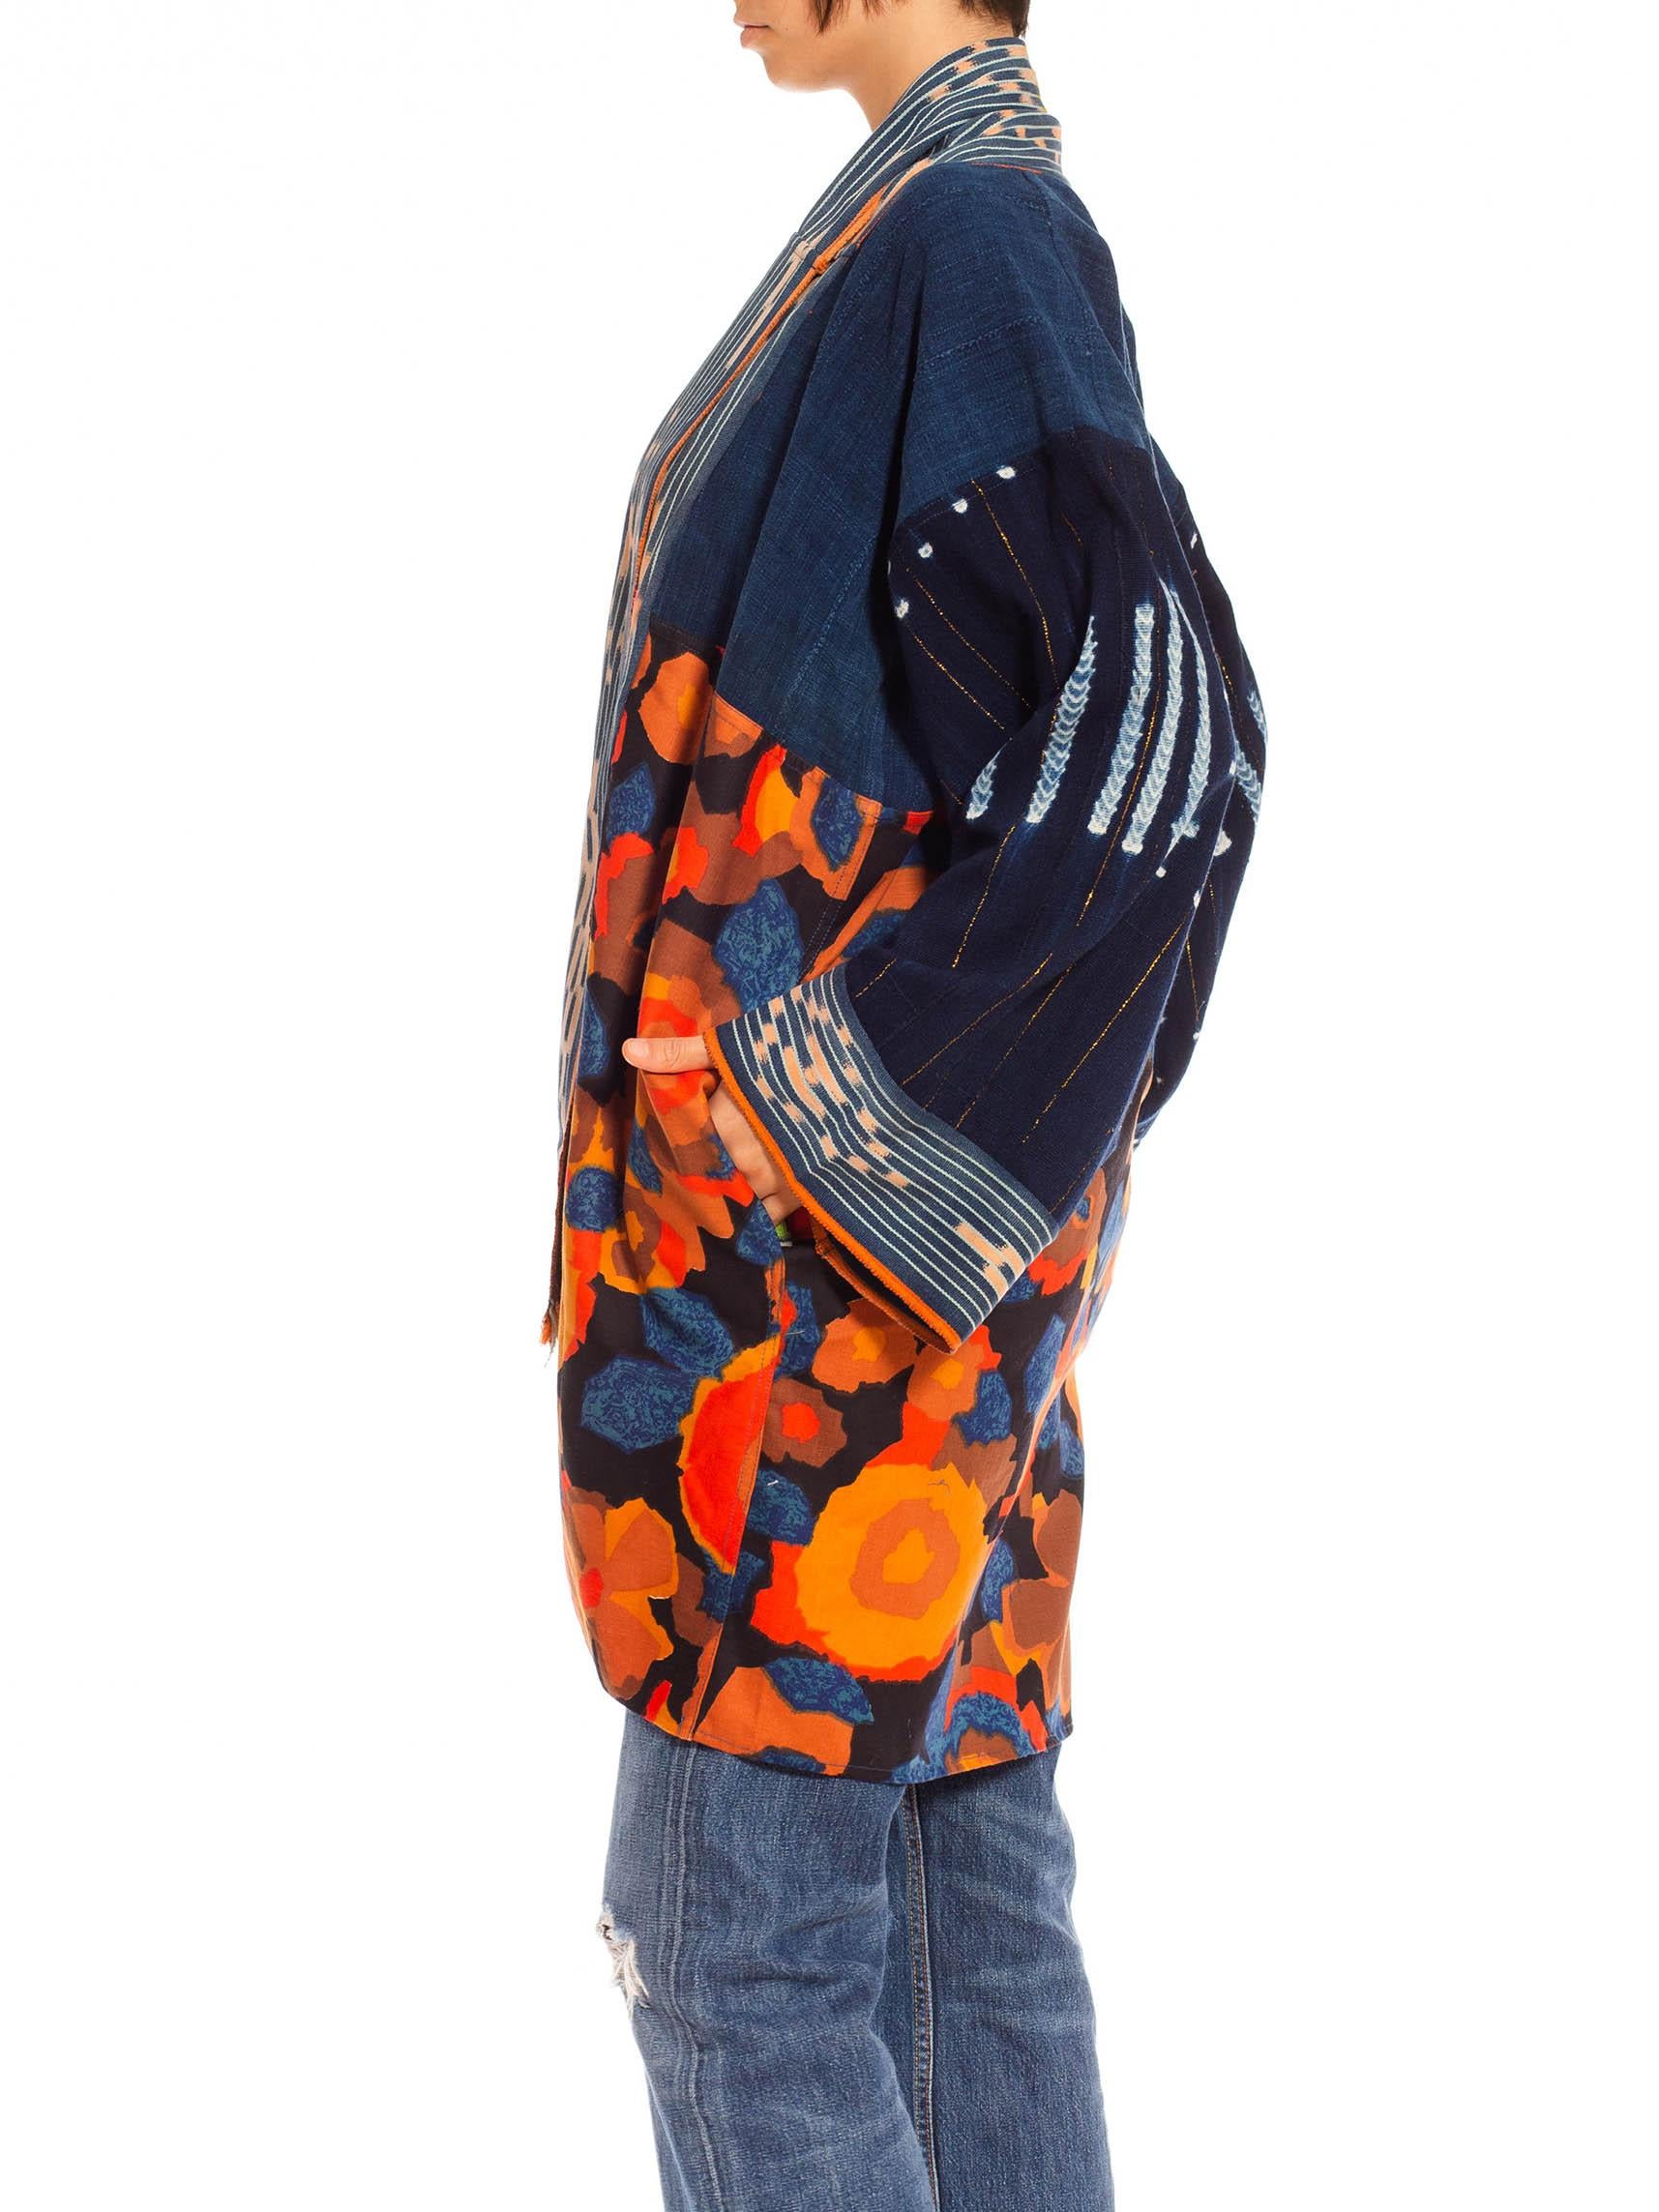 Noir Morphew Collection - Tissu en coton bleu et orange vintage africain cyclisé, collection Indig en vente